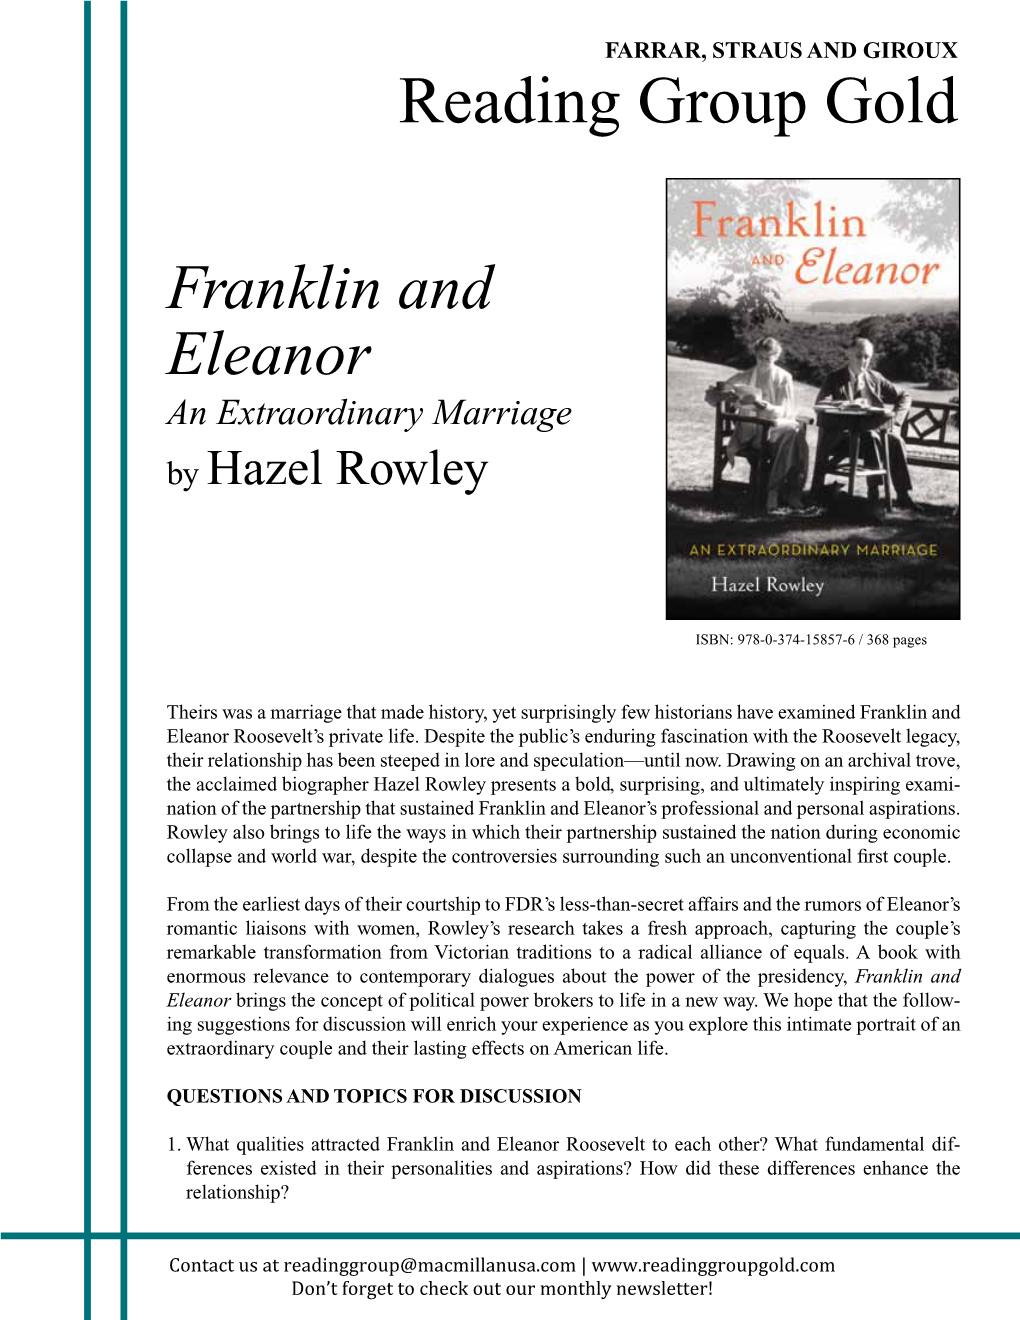 Franklin and Eleanor an Extraordinary Marriage by Hazel Rowley